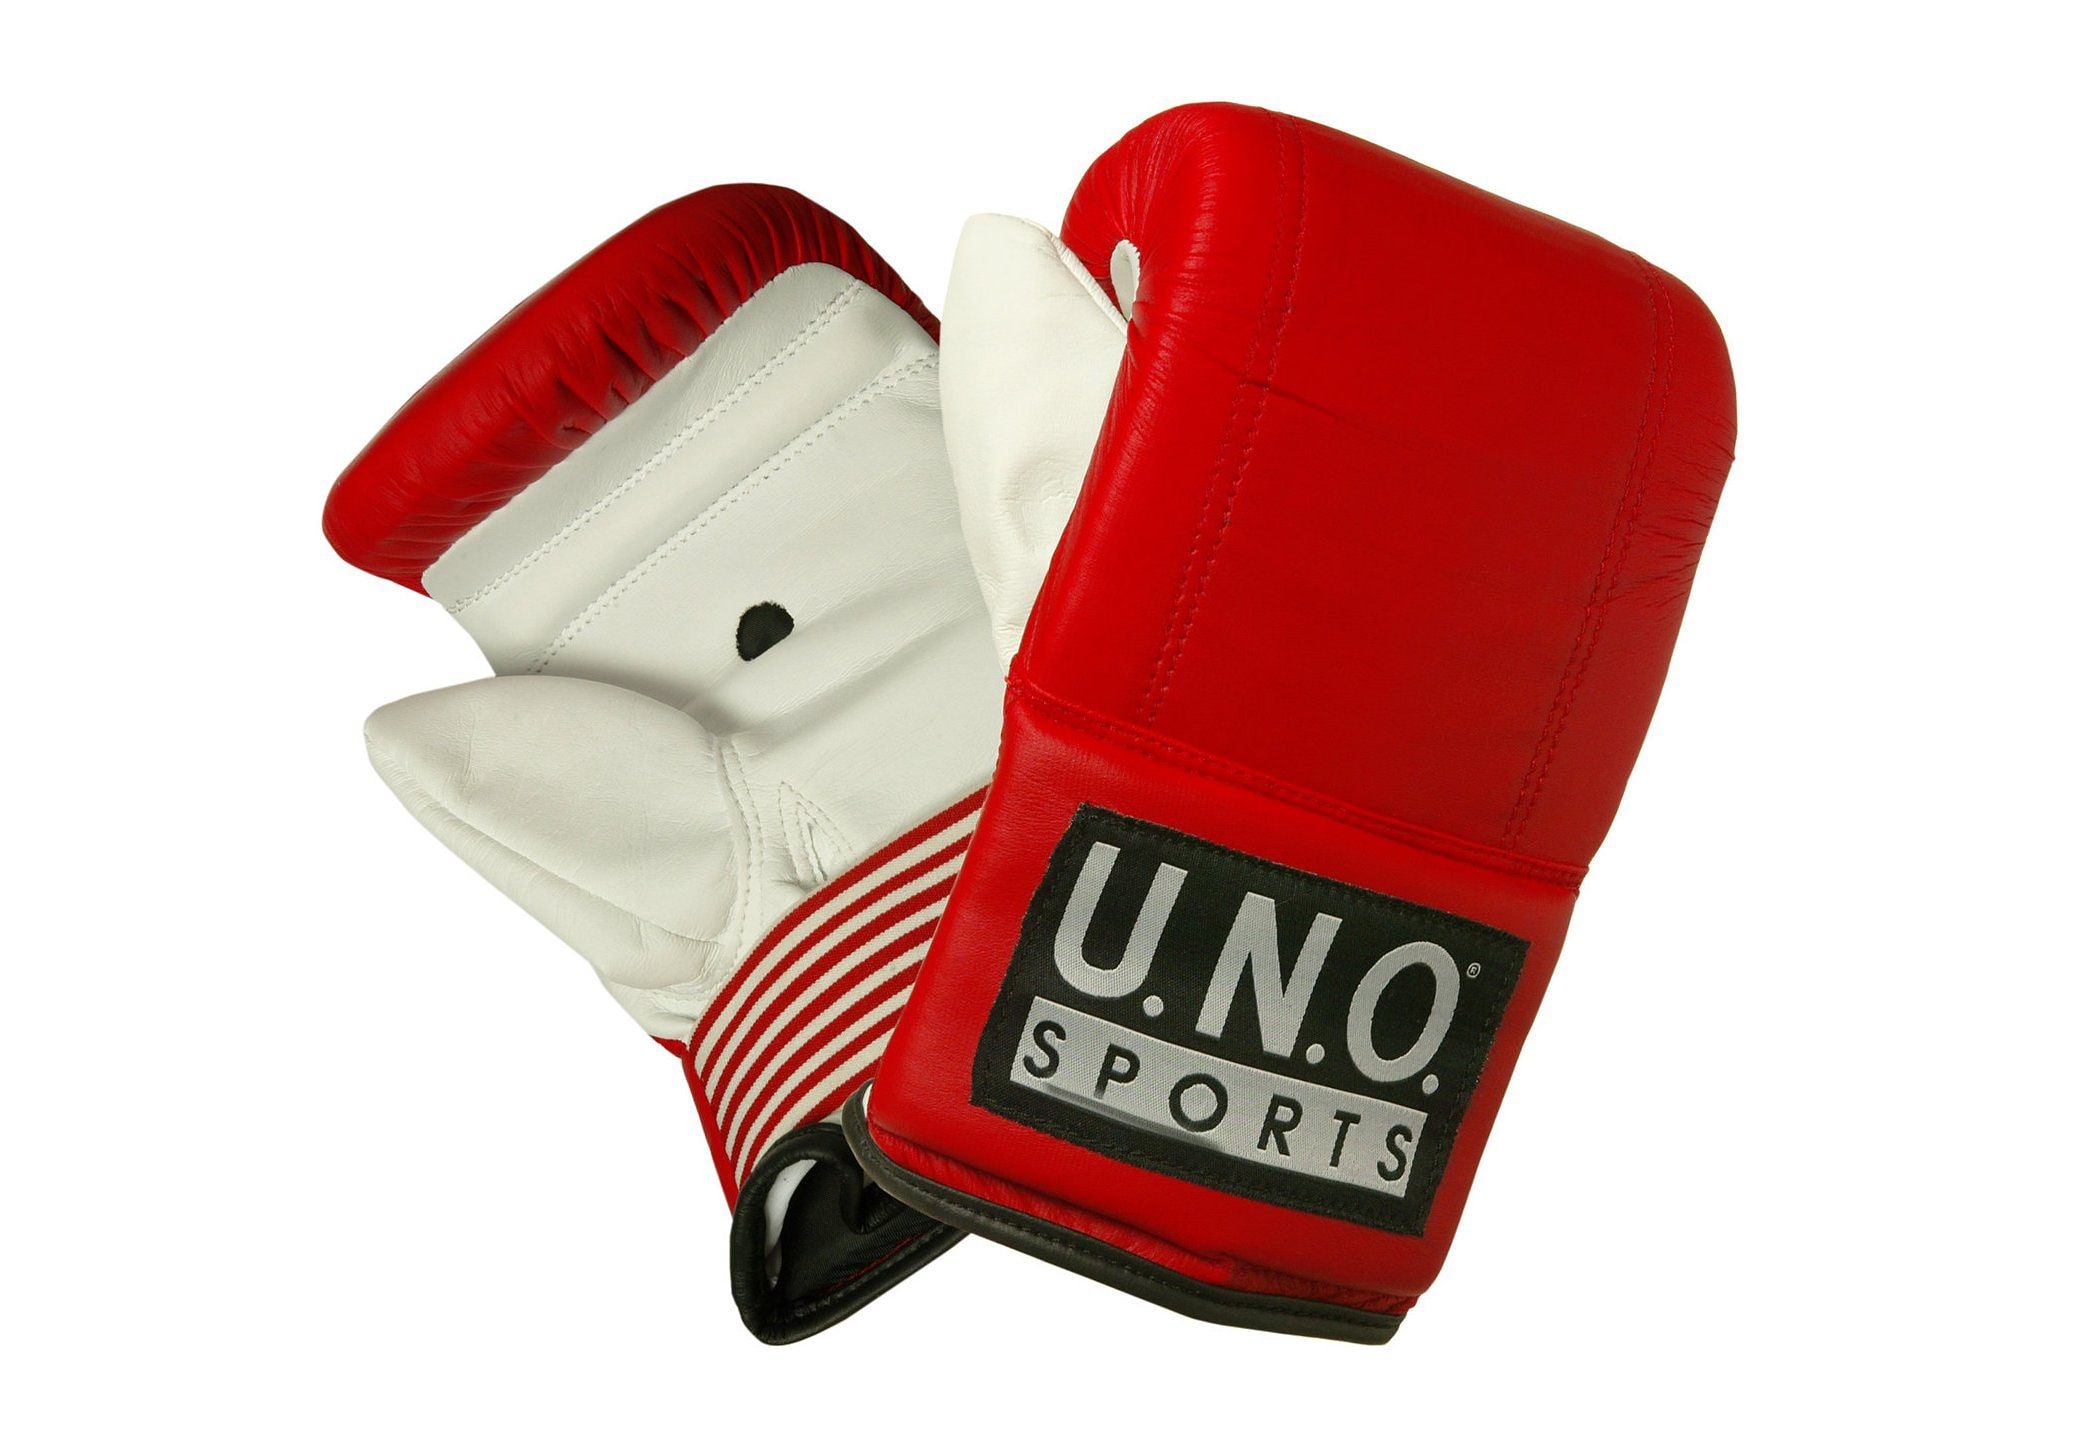 SPORTS kaufen Boxhandschuhe günstig »Light« U.N.O.